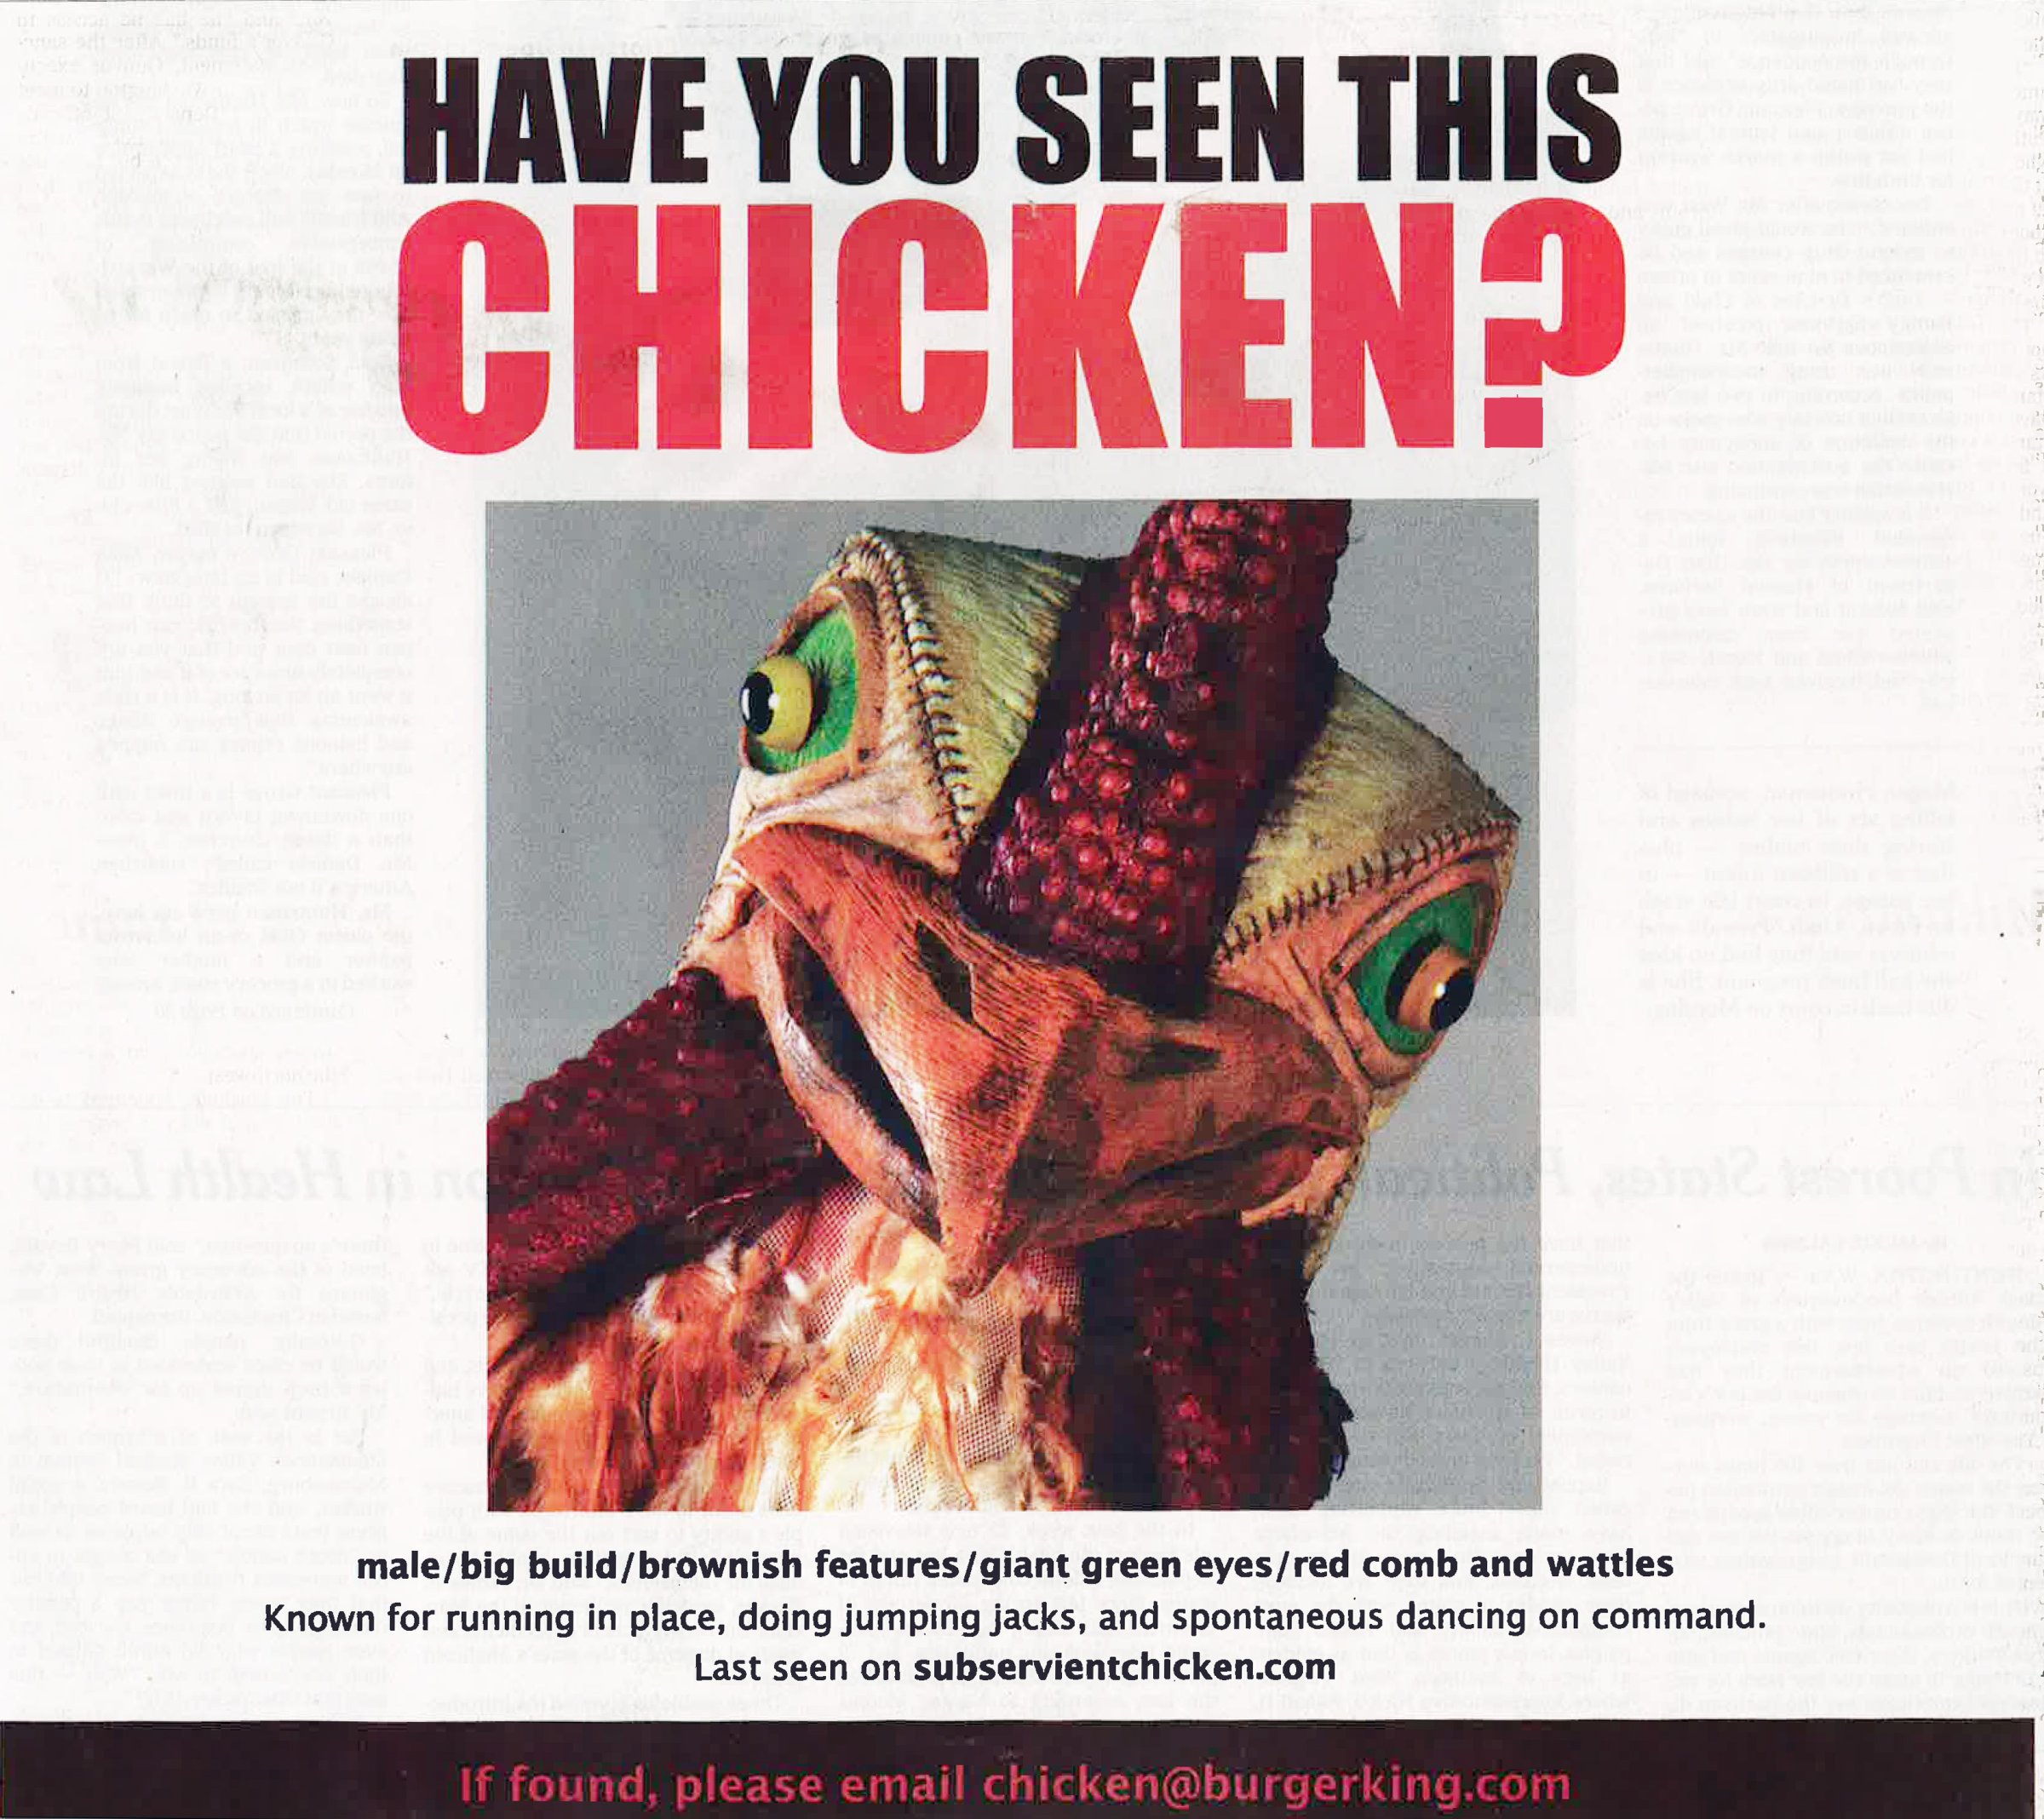 Burger King Subservient Chicken ad